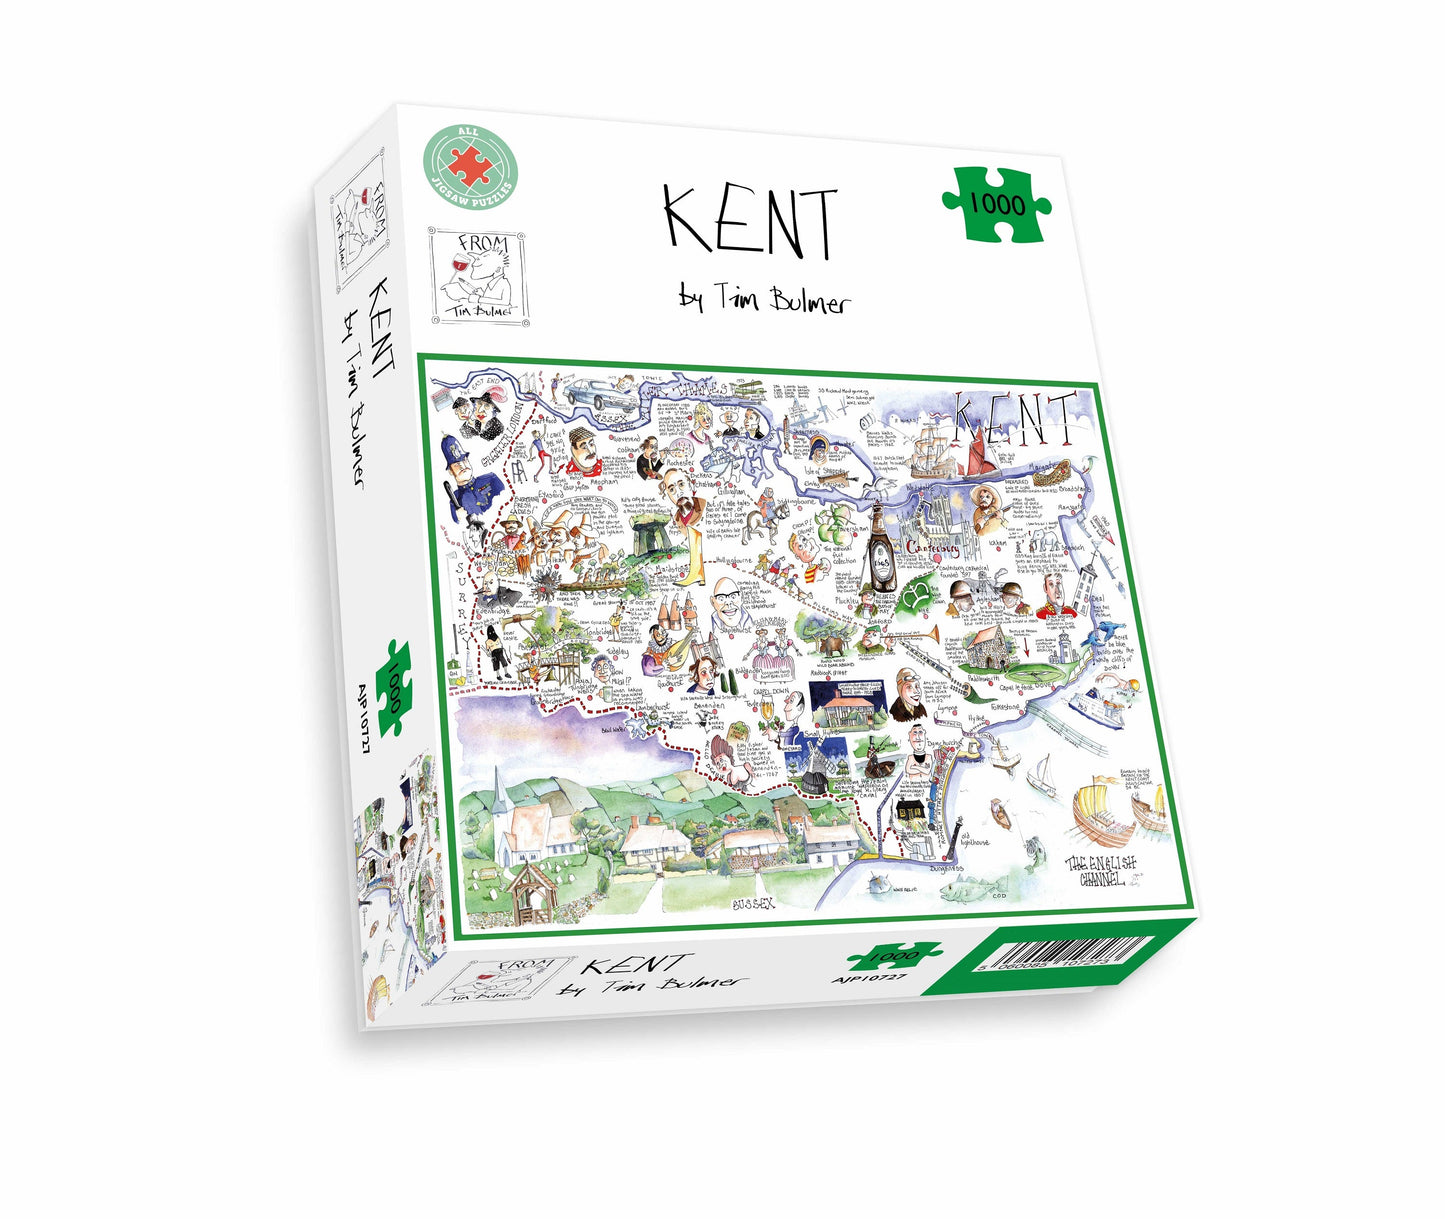 Kent - Tim Bulmer 1000 piece Jigsaw box